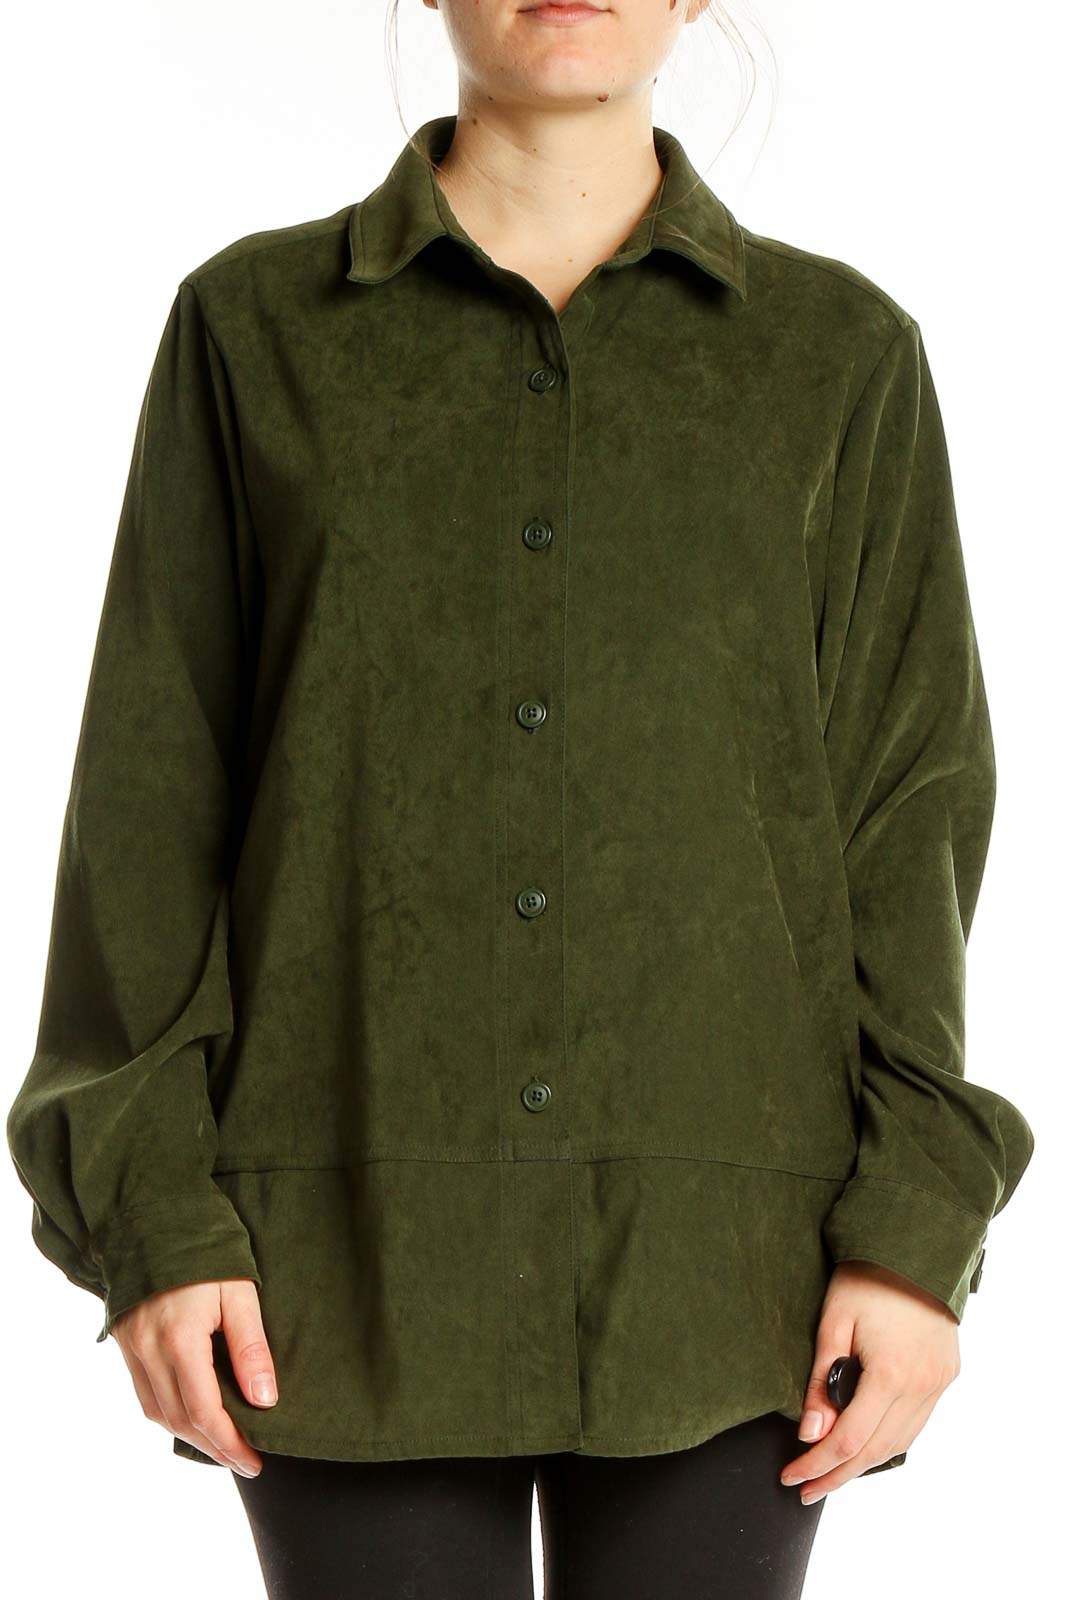 Green Textured Shirt Jacket Front